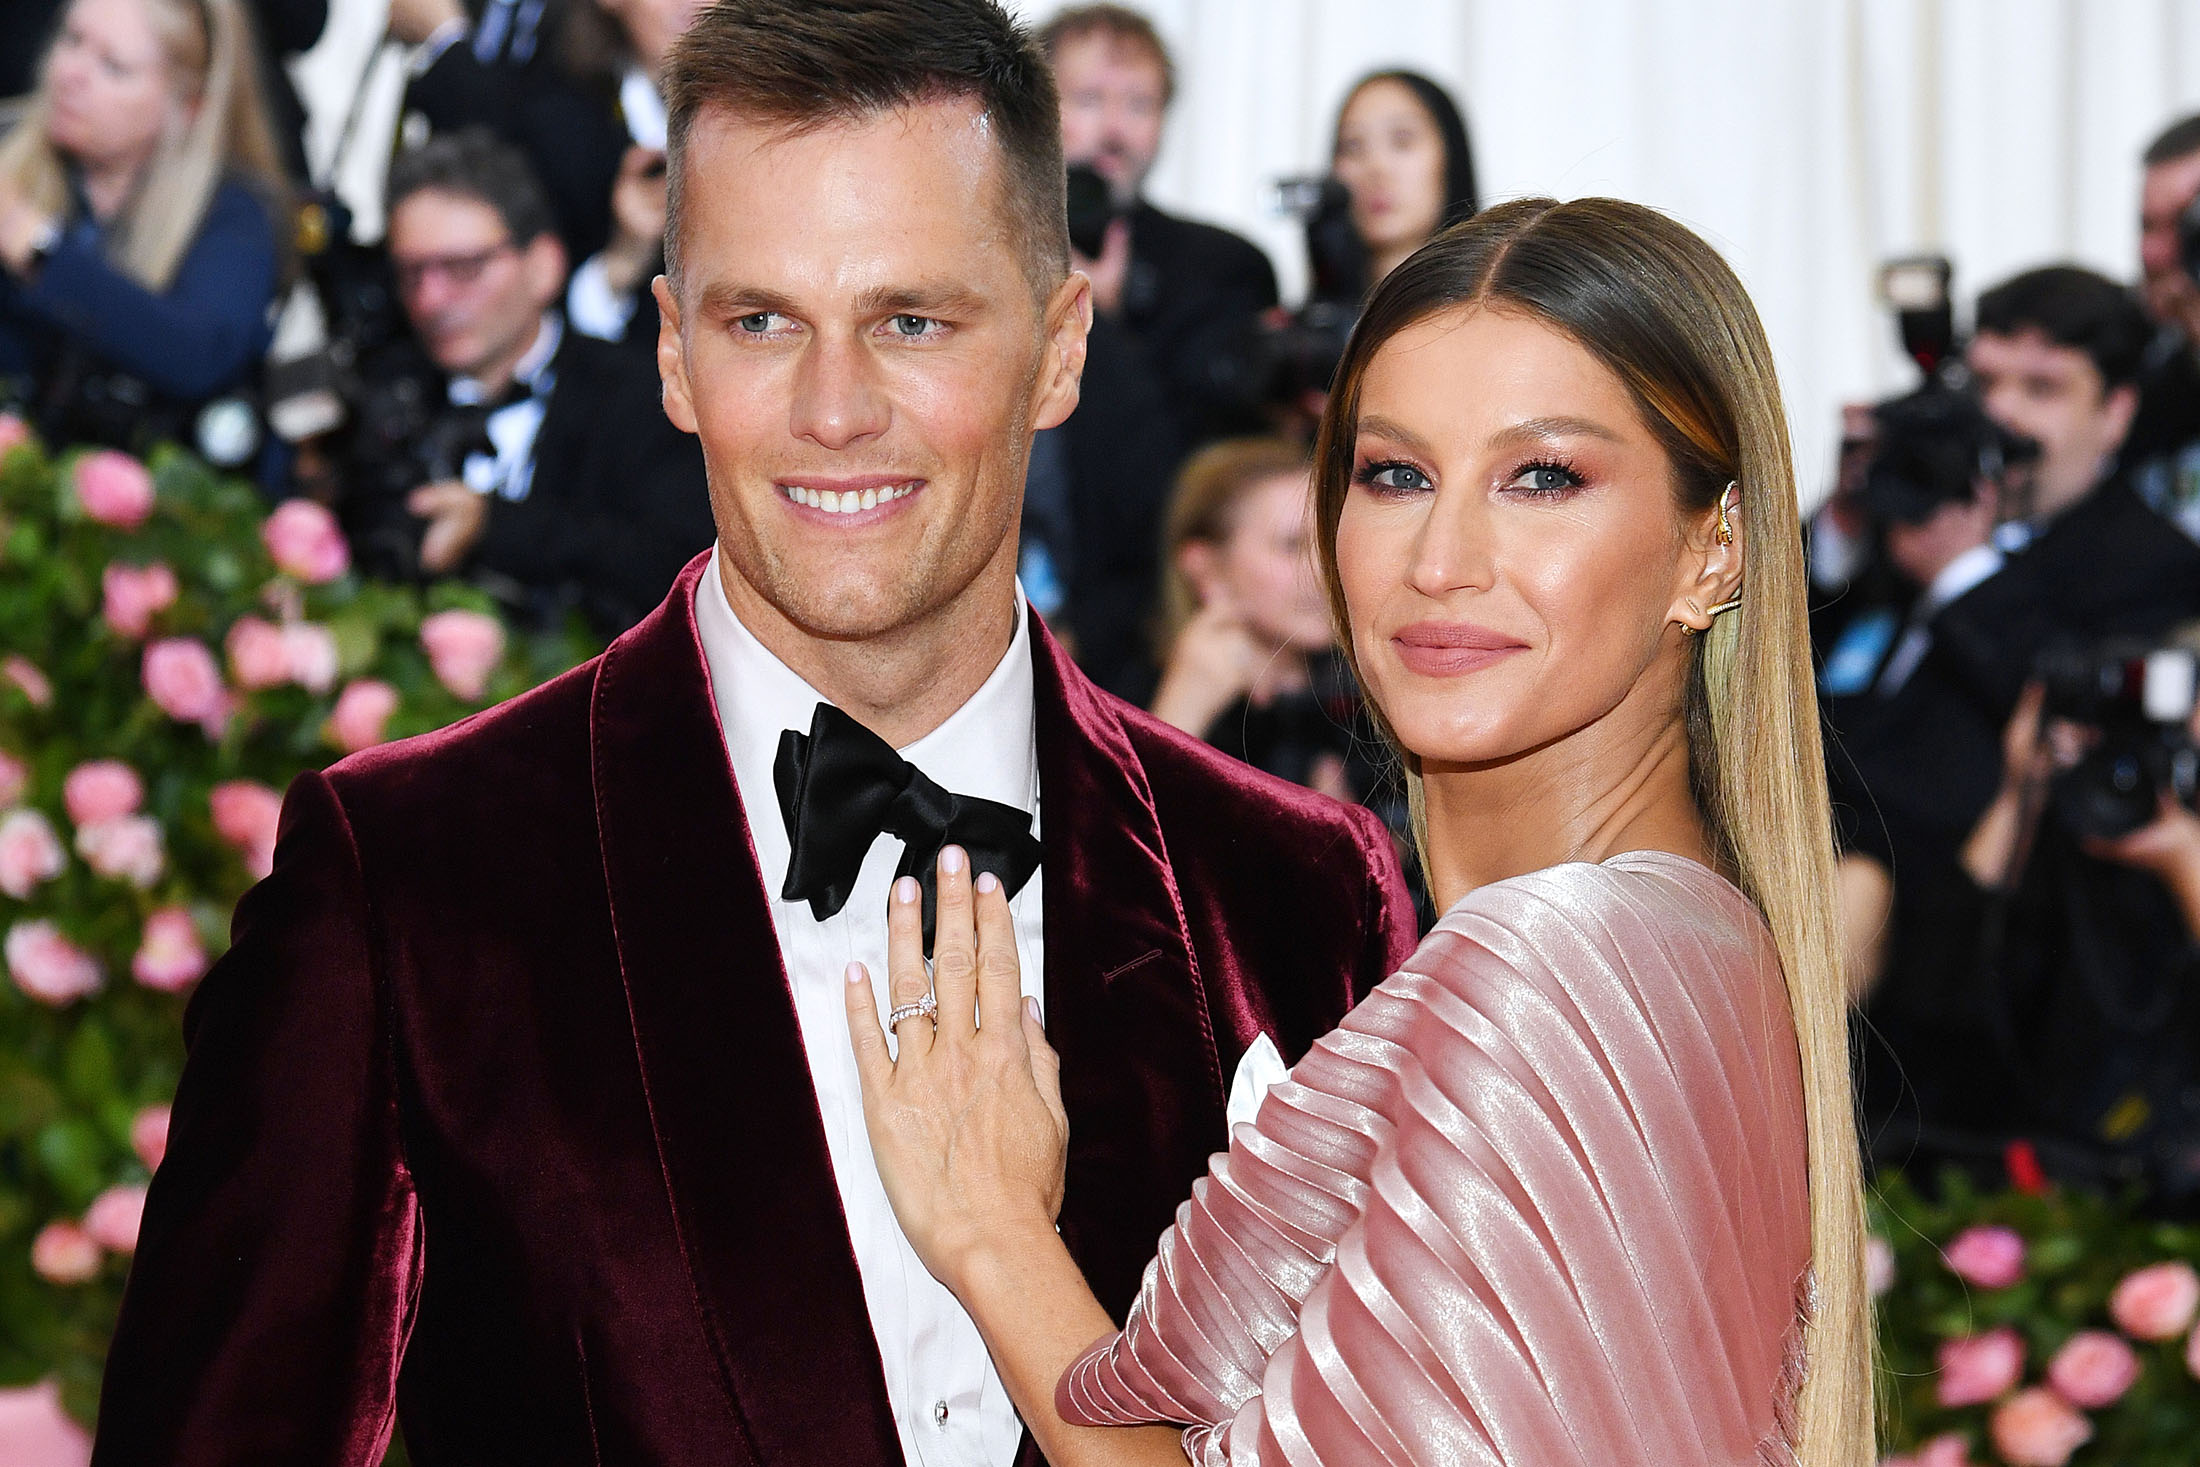 Tom Brady, Gisele Bundchen Divorce After 13 Years Married - Bloomberg